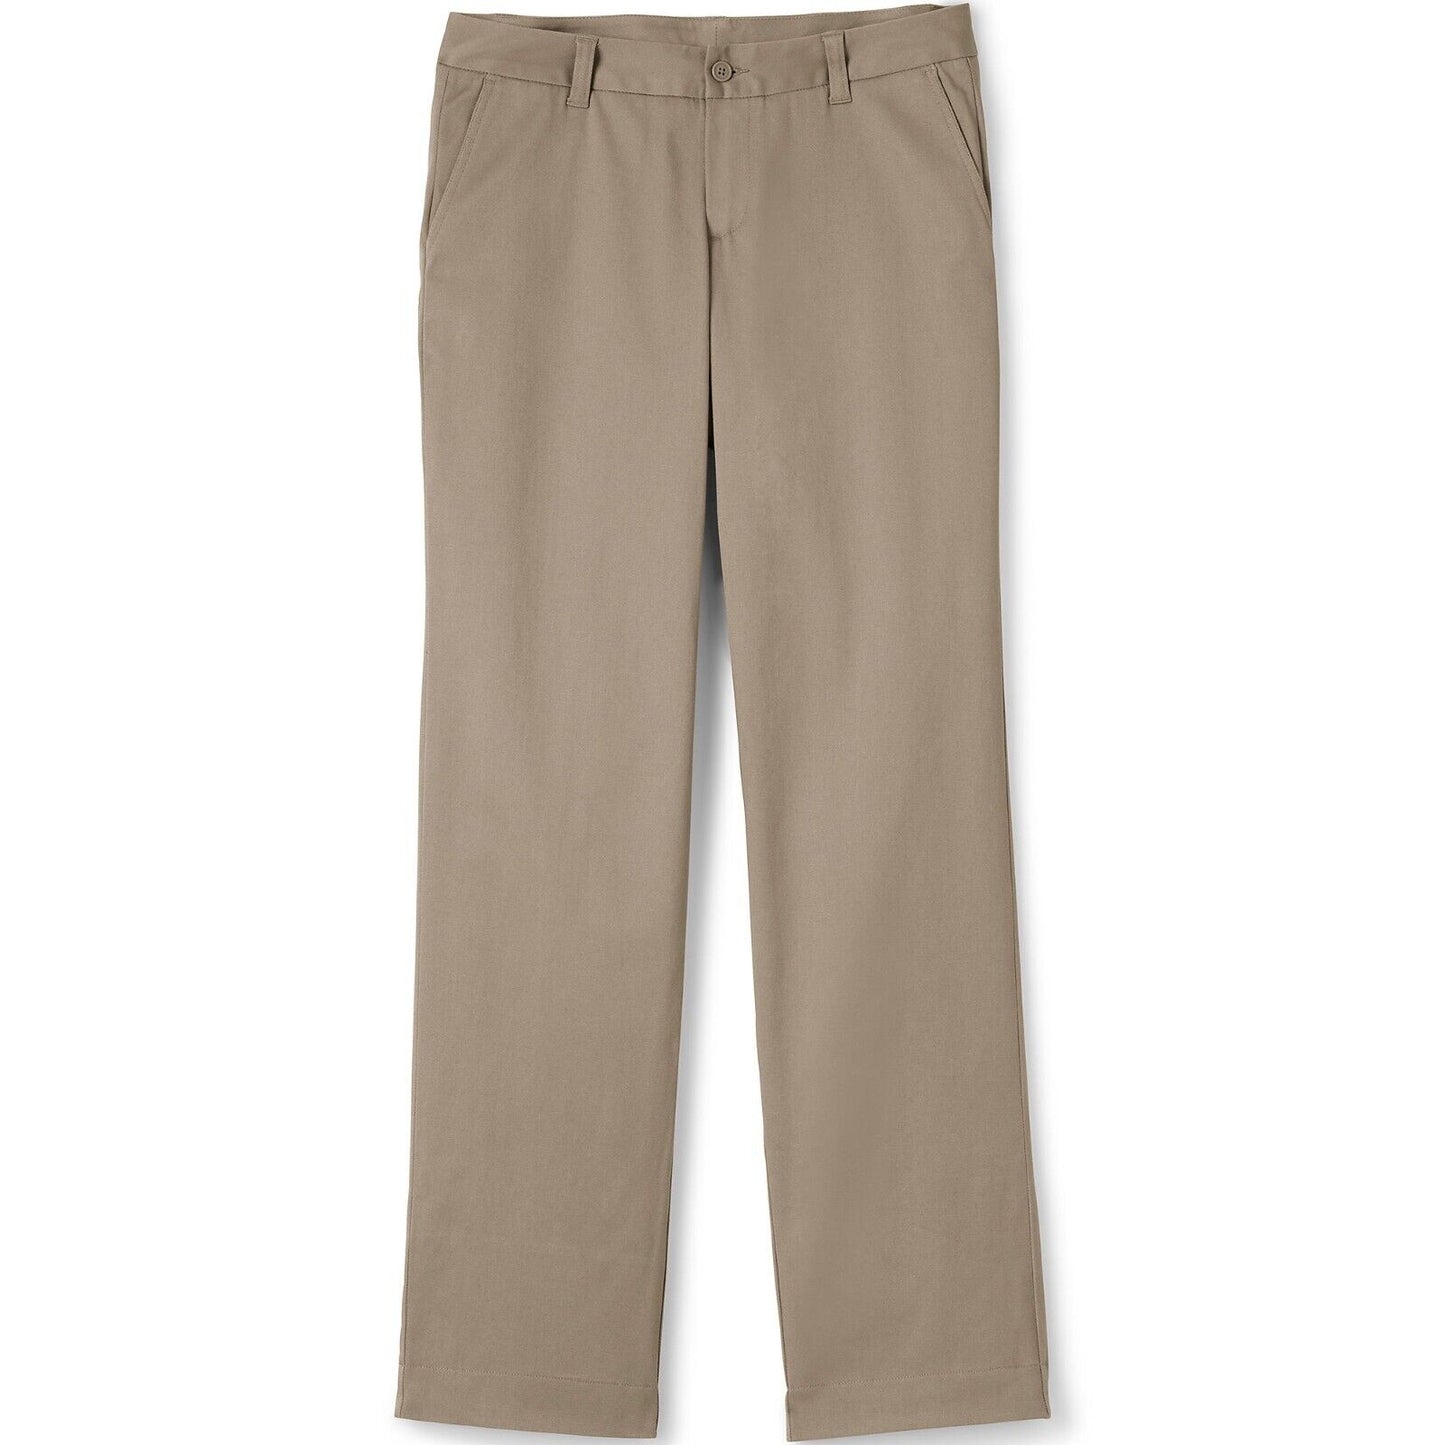 Women's Plain Front Stretch Chino Pants size 12